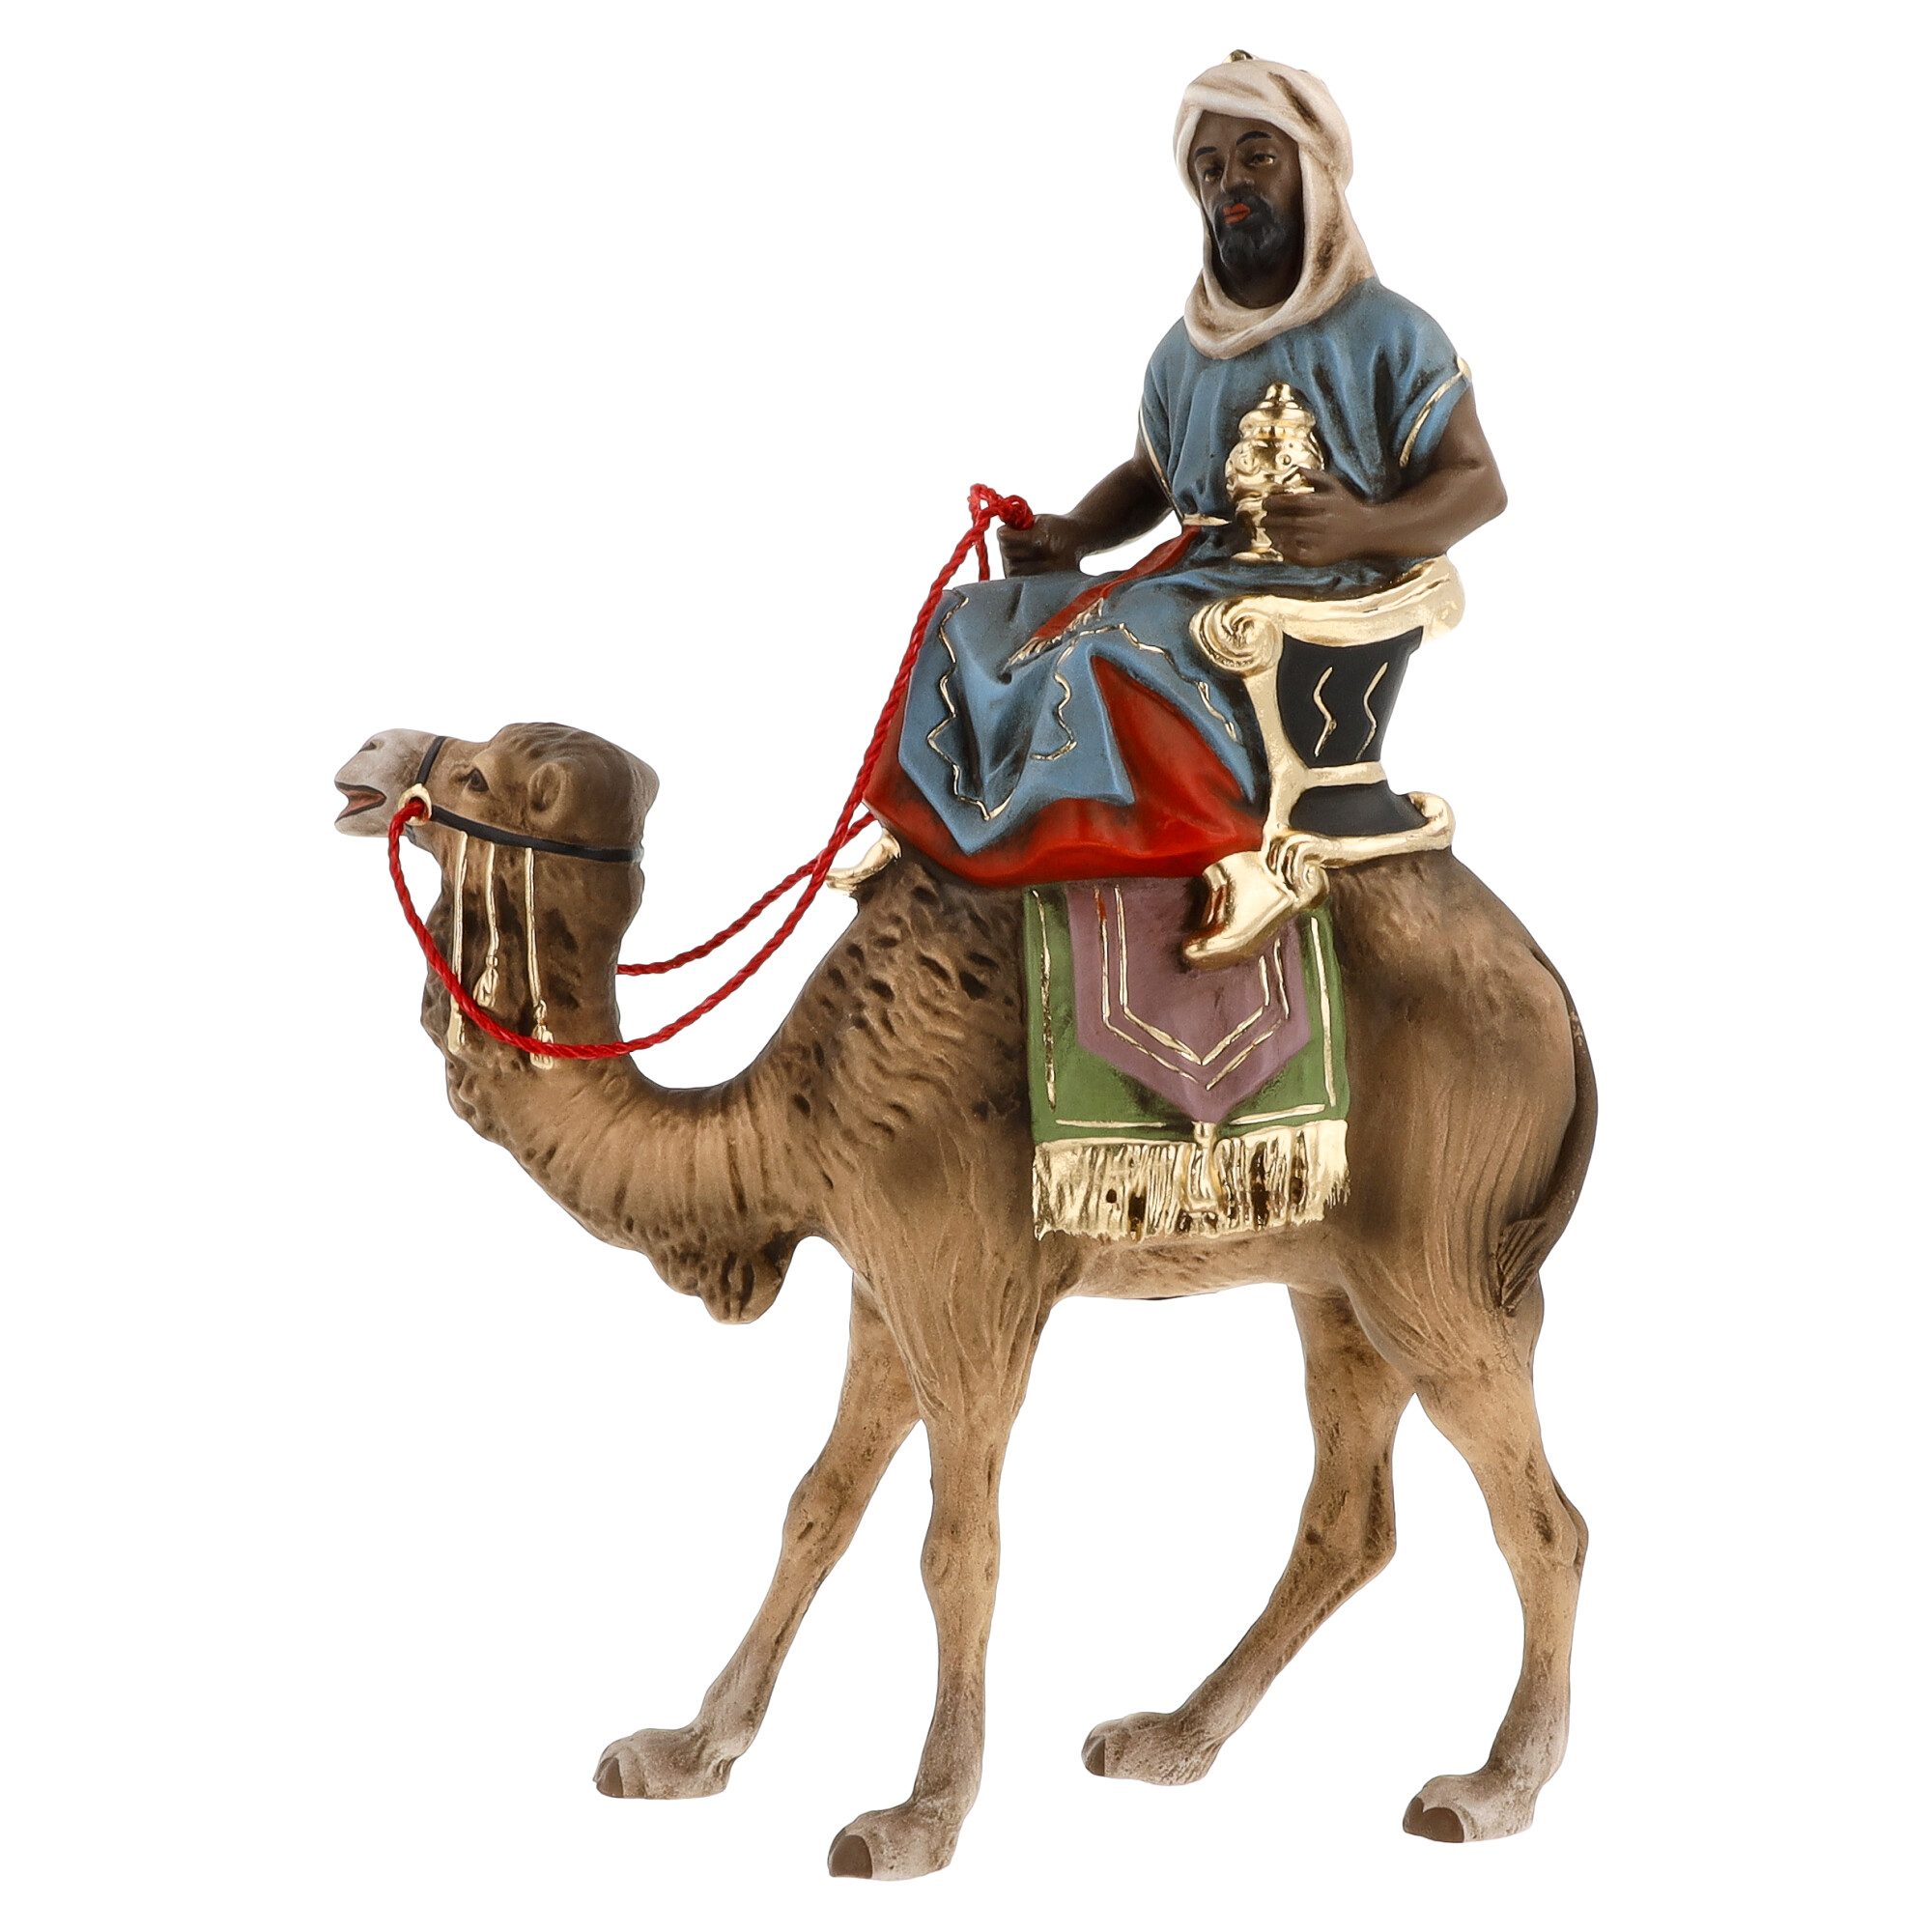 König schwarz (Caspar) zu Kamel, zu 12cm Figuren